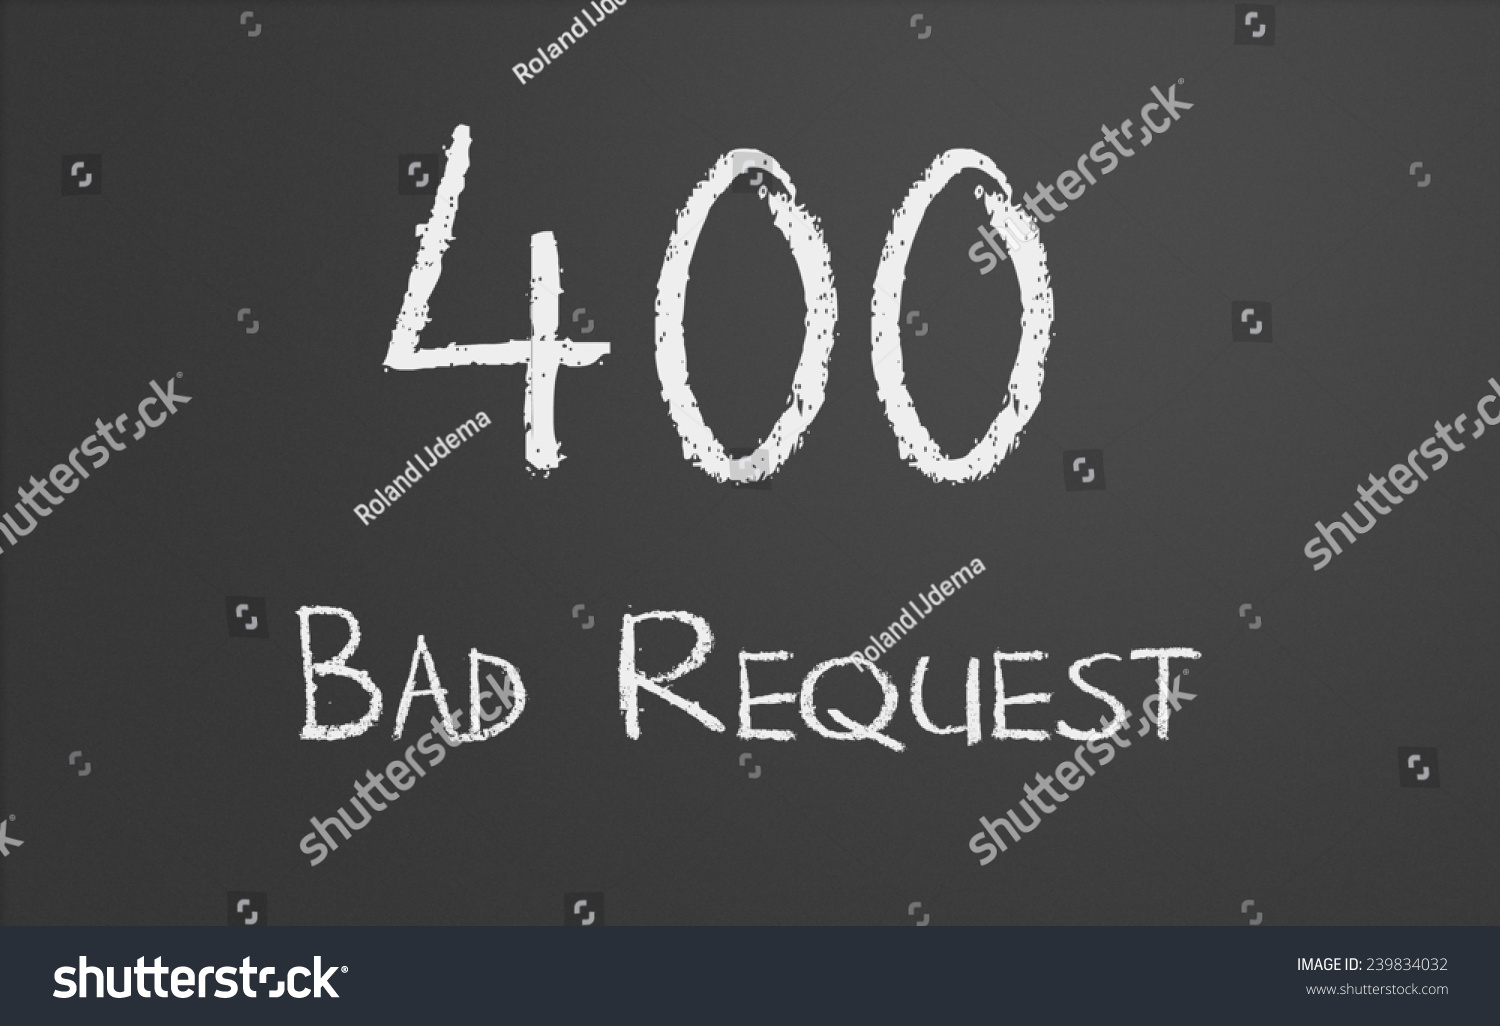 Http Status Code 400 Bad Request Stock Illustration 239834032